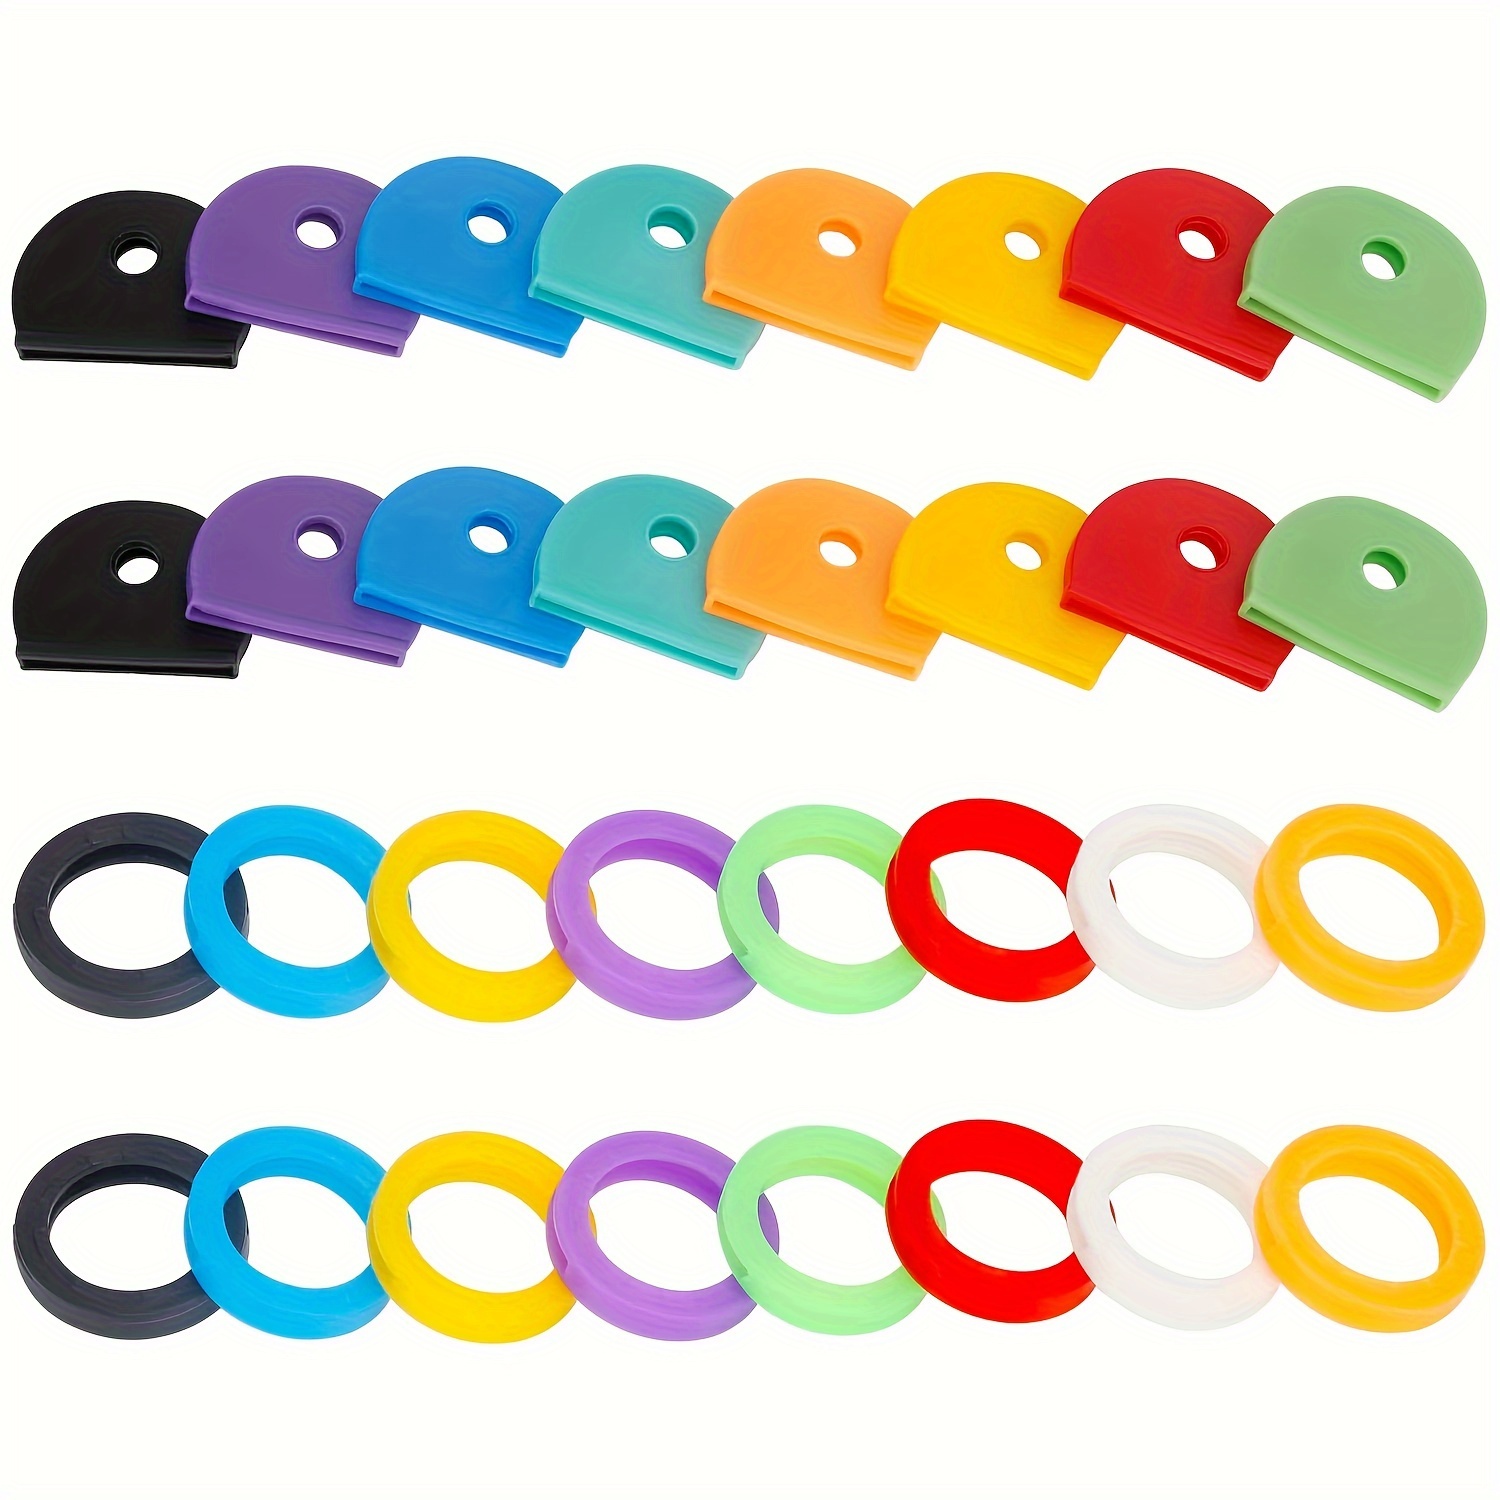  1 bolsa/32 tapas de silicona flexibles para llaves, etiquetas  de identificador, identificador, identificador de identificación,  accesorios para llaves de casa, clave de goma (color al azar) : Arte y  Manualidades